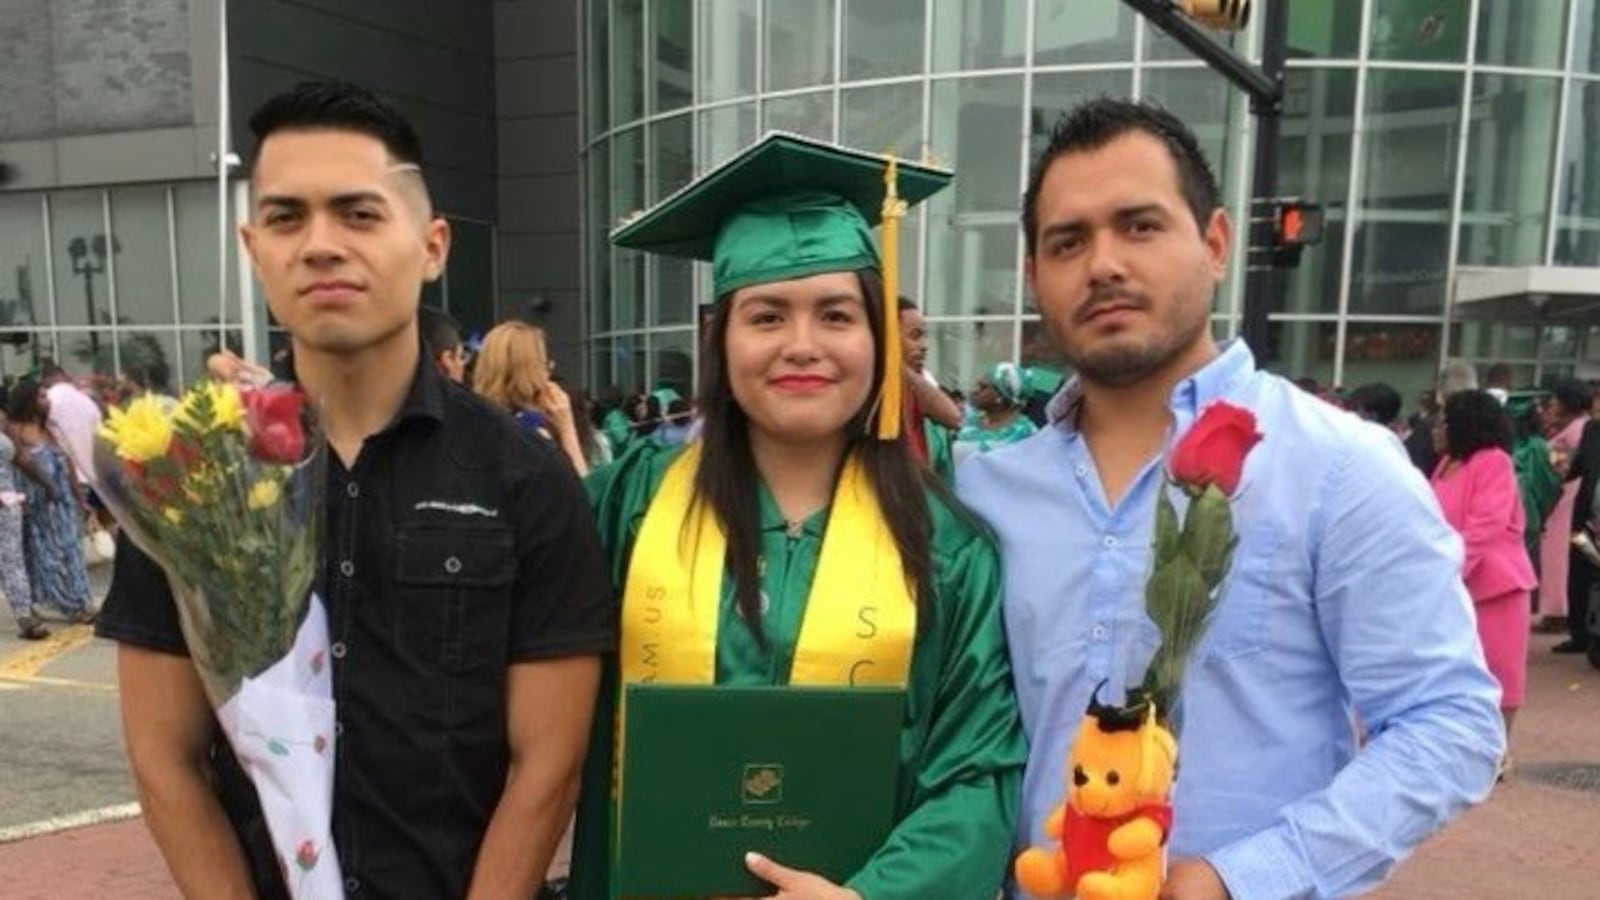 Gloria, Nestor, and Sergio at Gloria’s graduation from Essex County College in Newark in 2018 